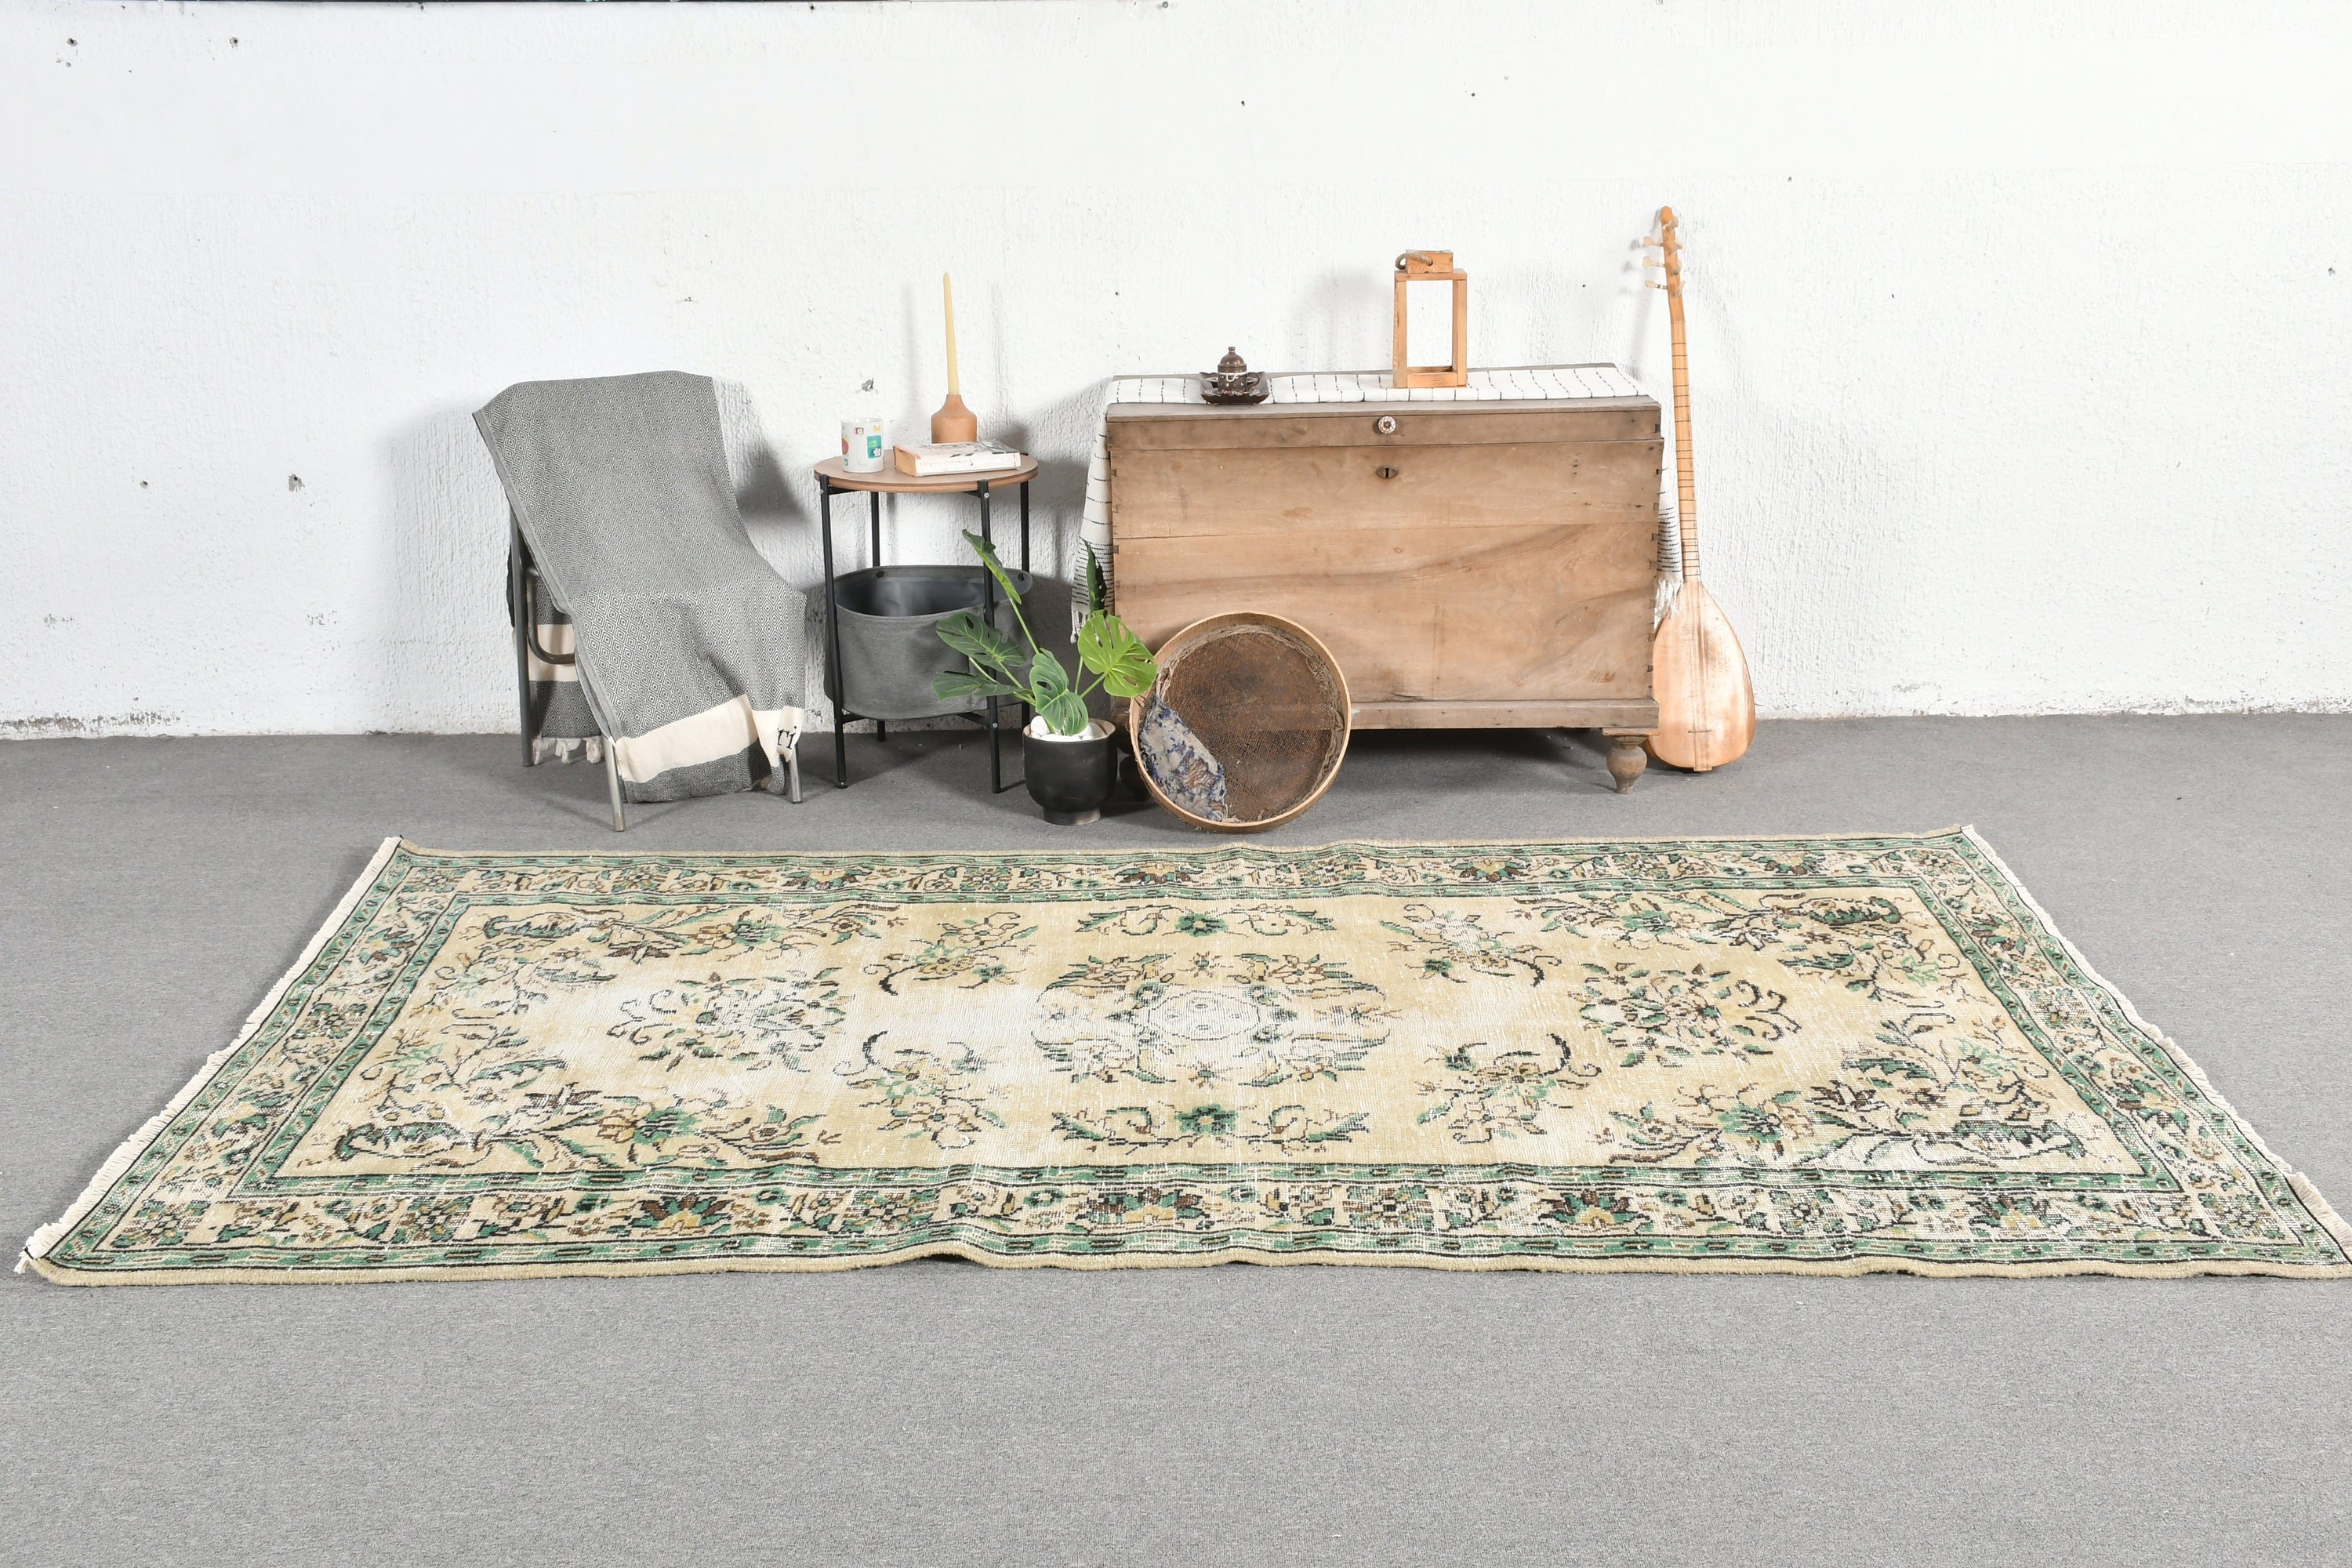 Turkish Rug, Kitchen Rug, 5.3x9 ft Large Rugs, Floor Rug, Dining Room Rug, Office Rug, Living Room Rug, Green Home Decor Rugs, Vintage Rugs